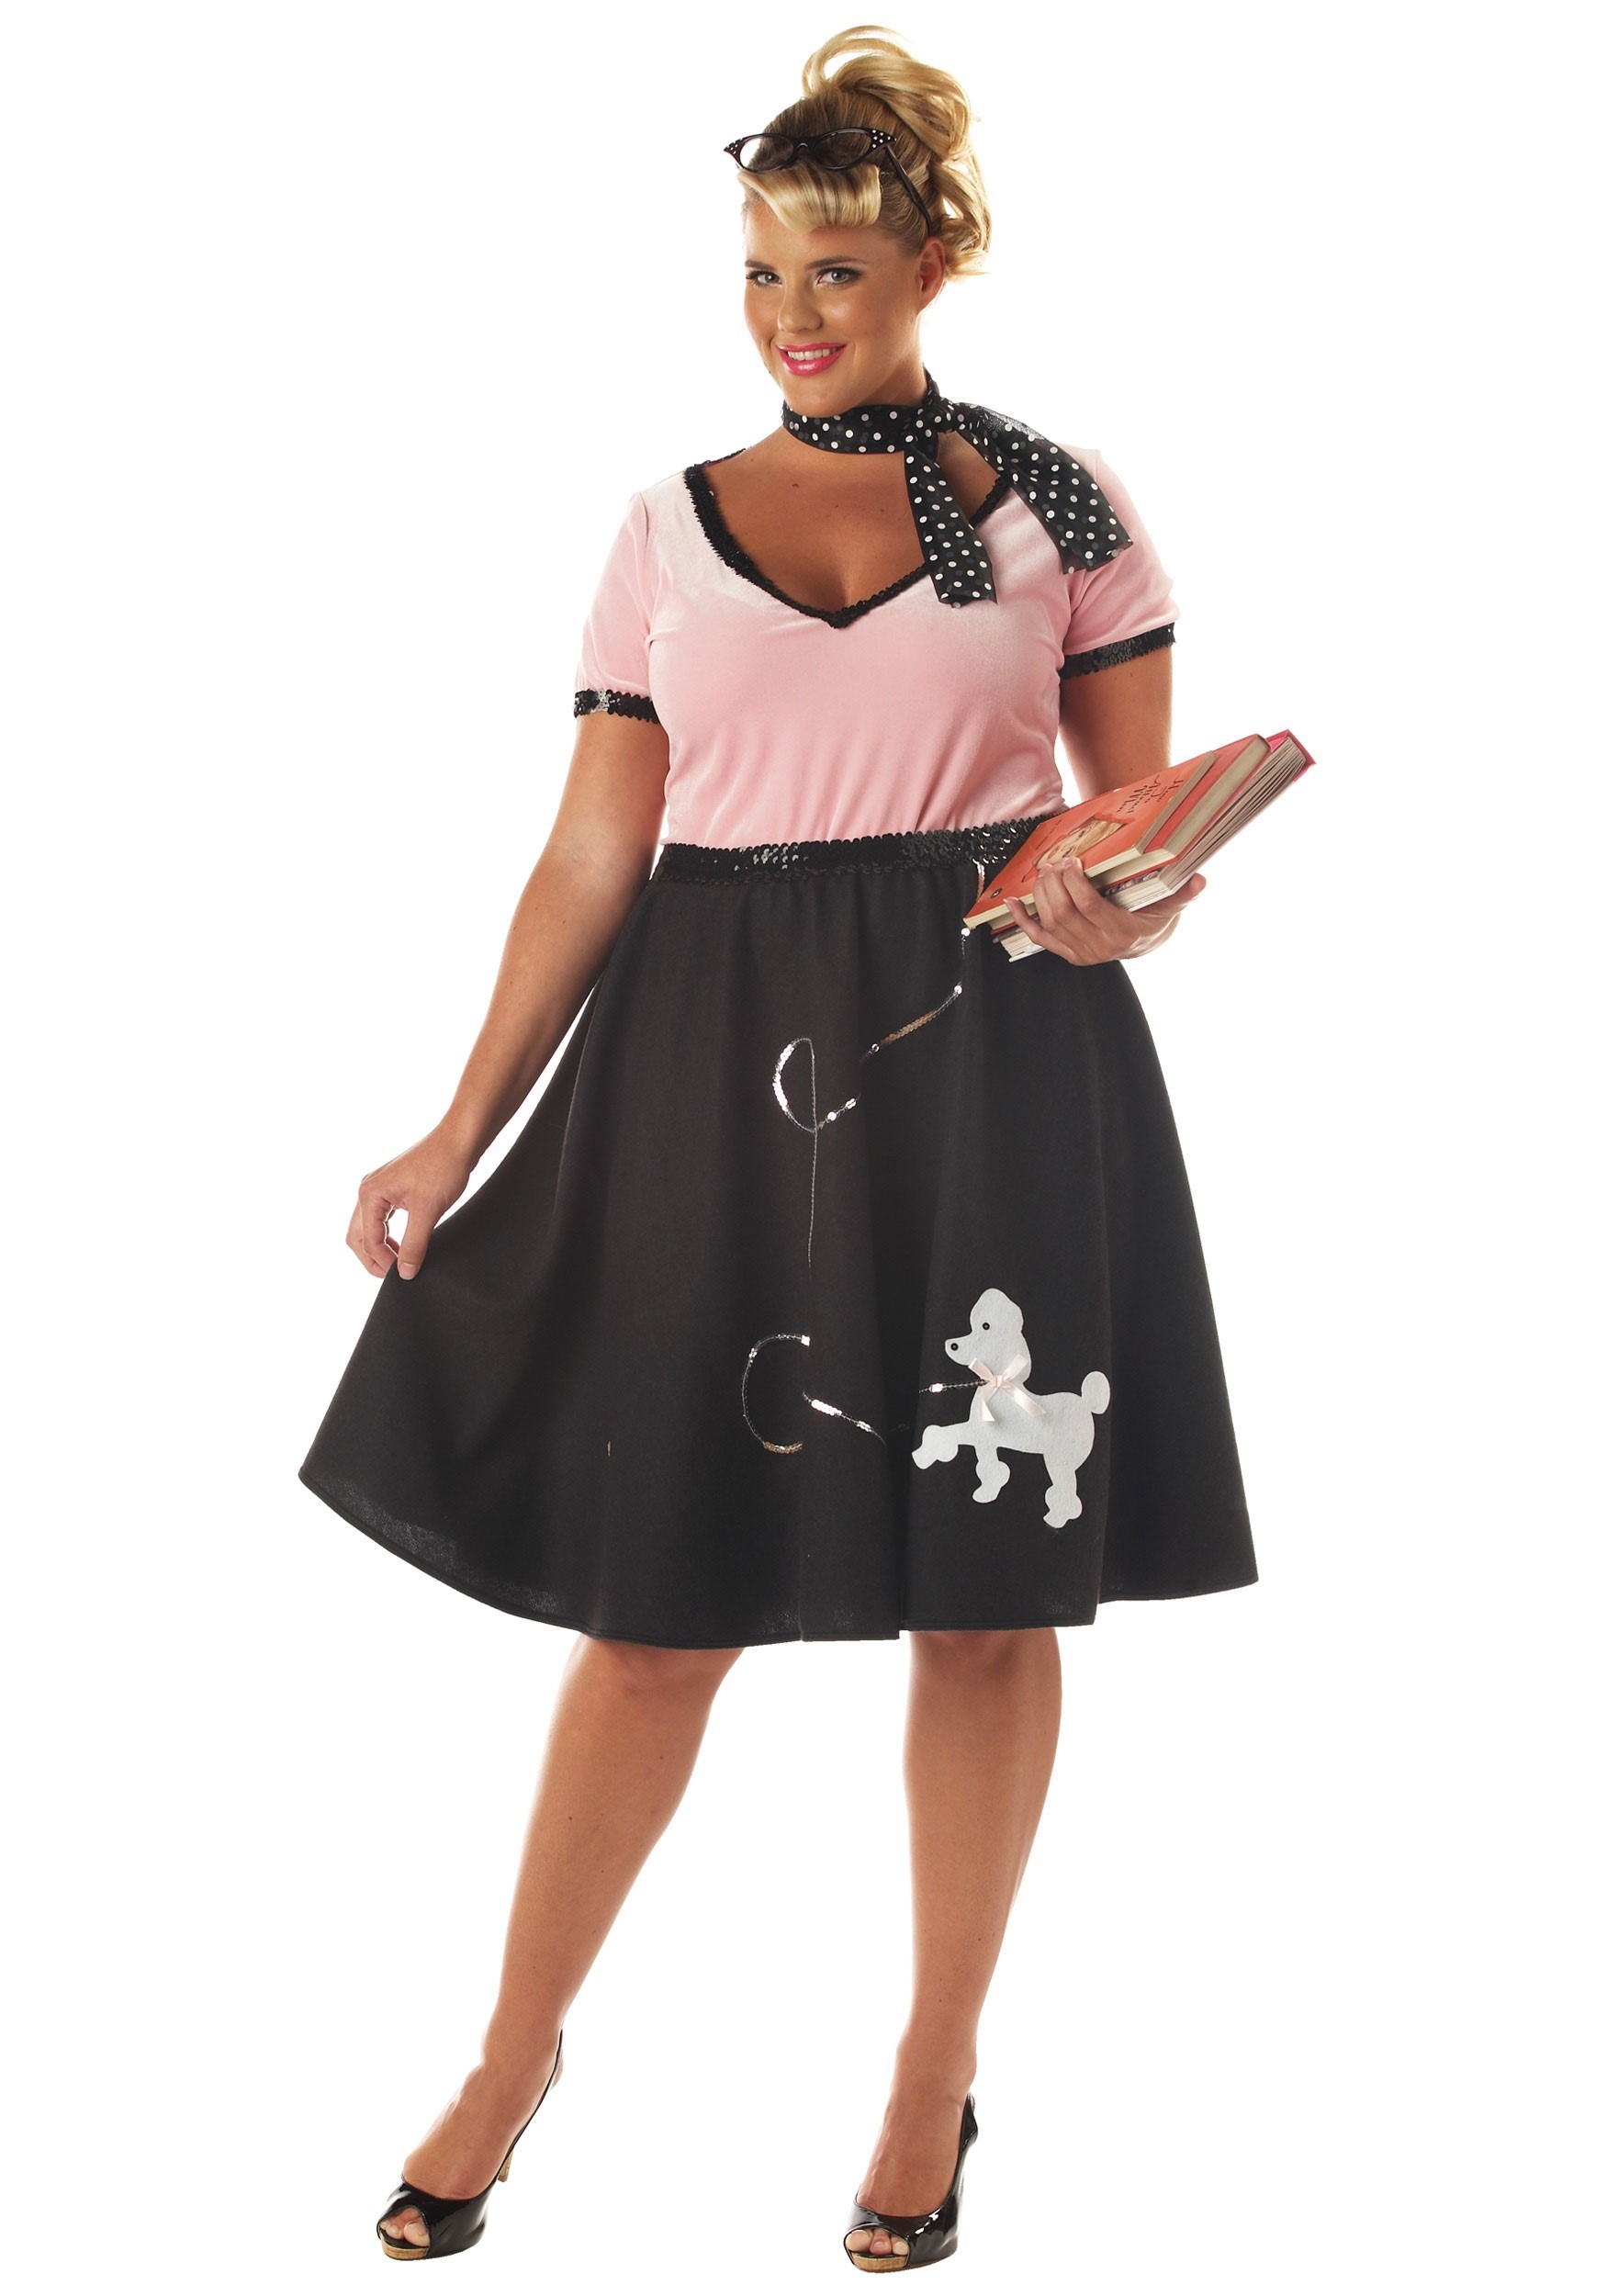 Poodle Skirts | Poodle Skirt Costumes, Patterns, History Plus Size 50s Sweetheart Costume - Sock Hop Halloween Costumes $34.99 AT vintagedancer.com